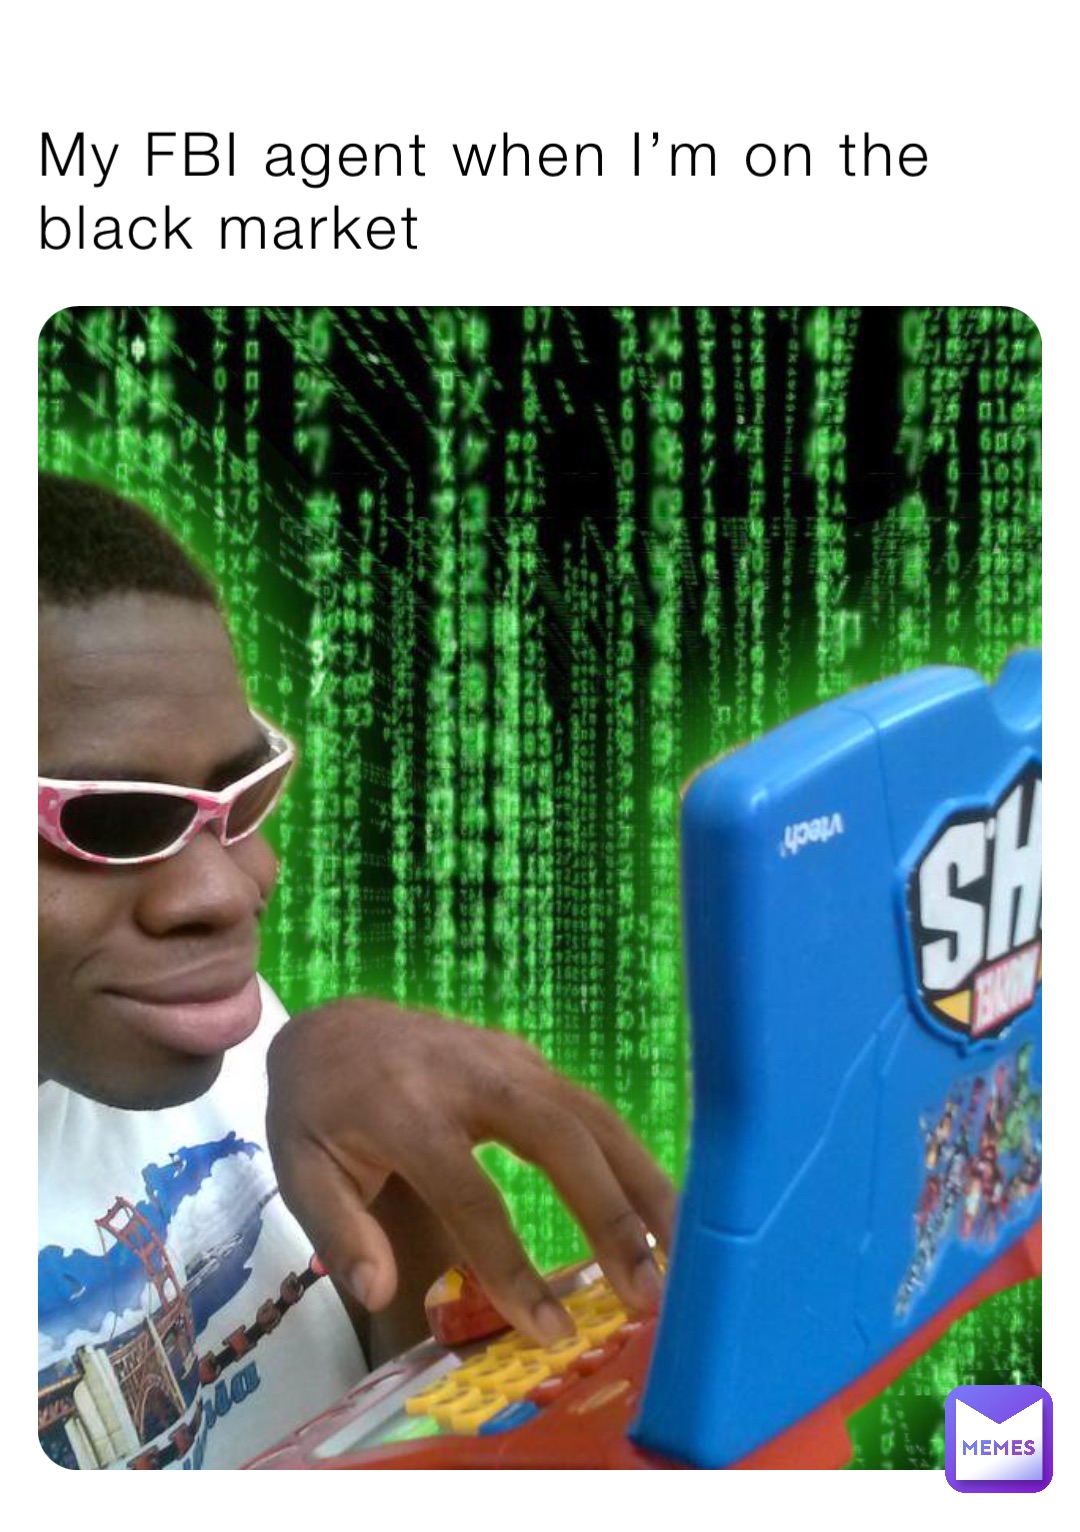 My FBI agent when I’m on the black market